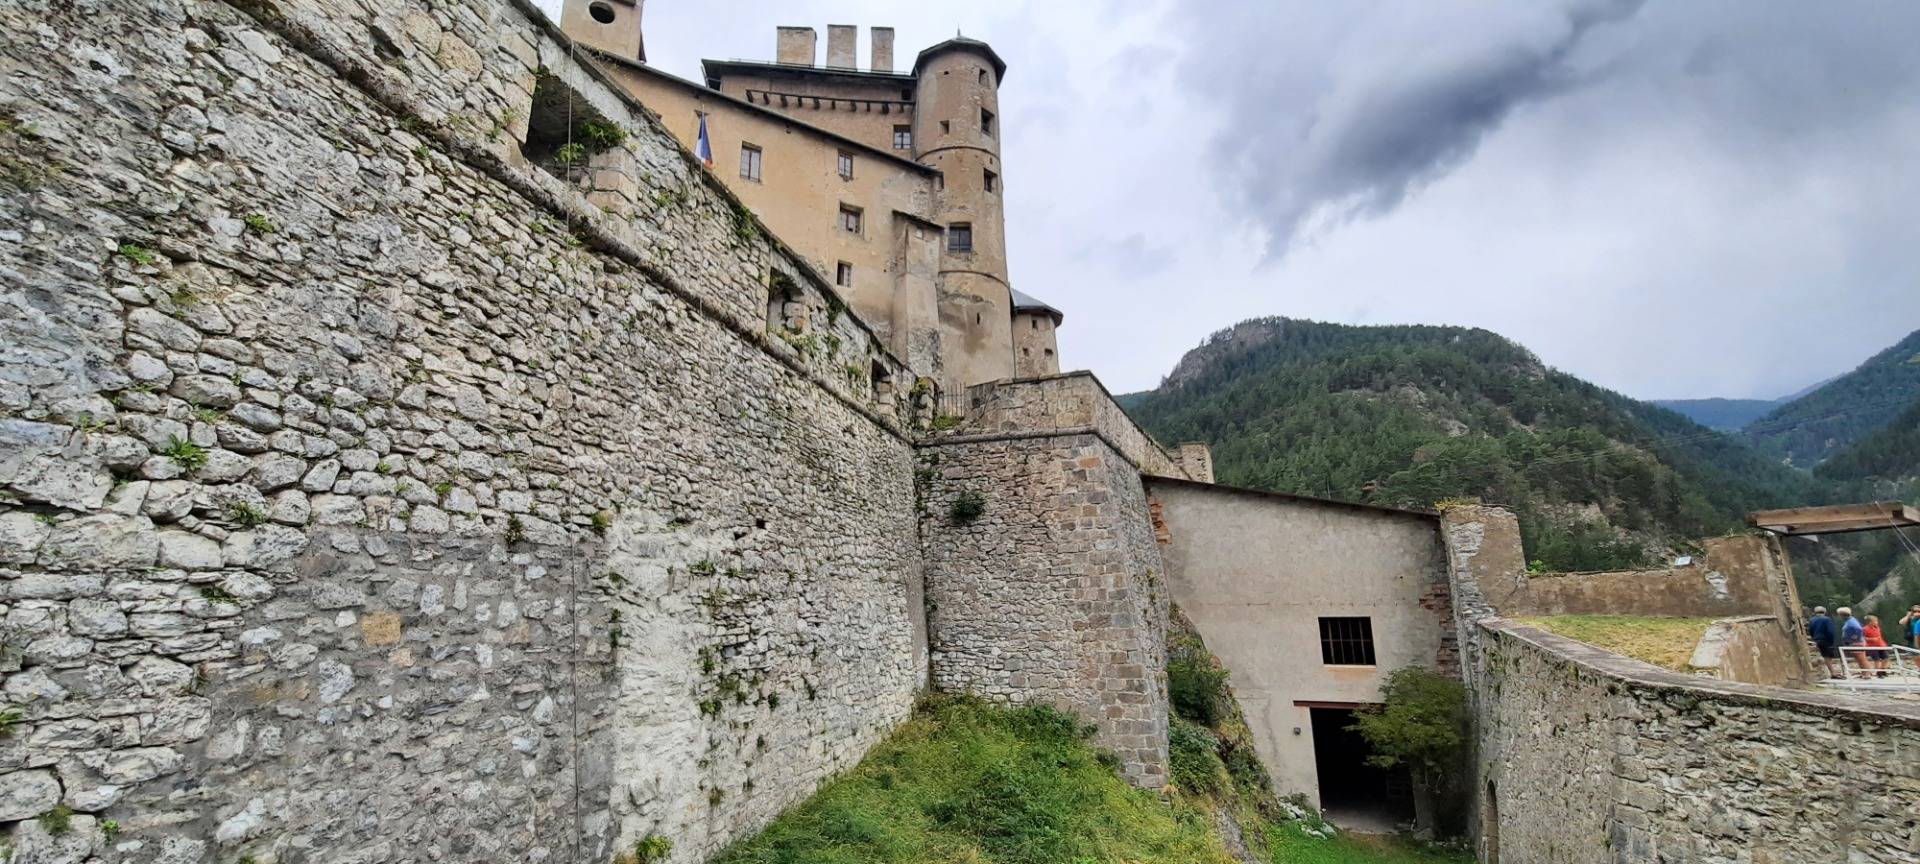 Château (castle) Queyras